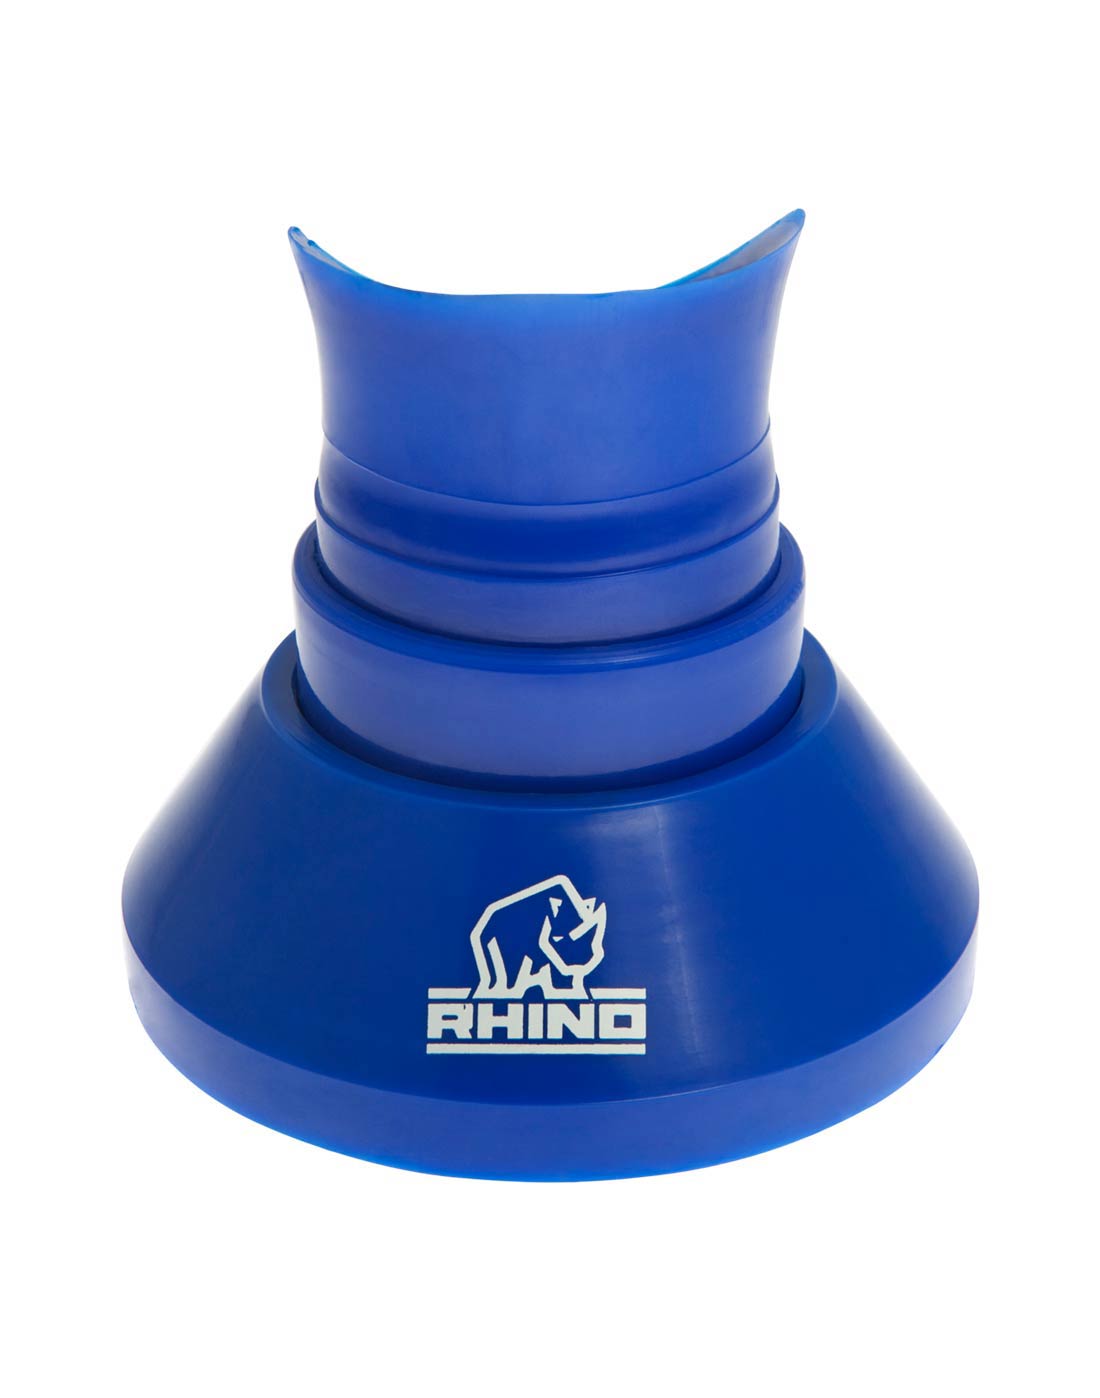 Rhino Pro Adjustable Kicking Tee 